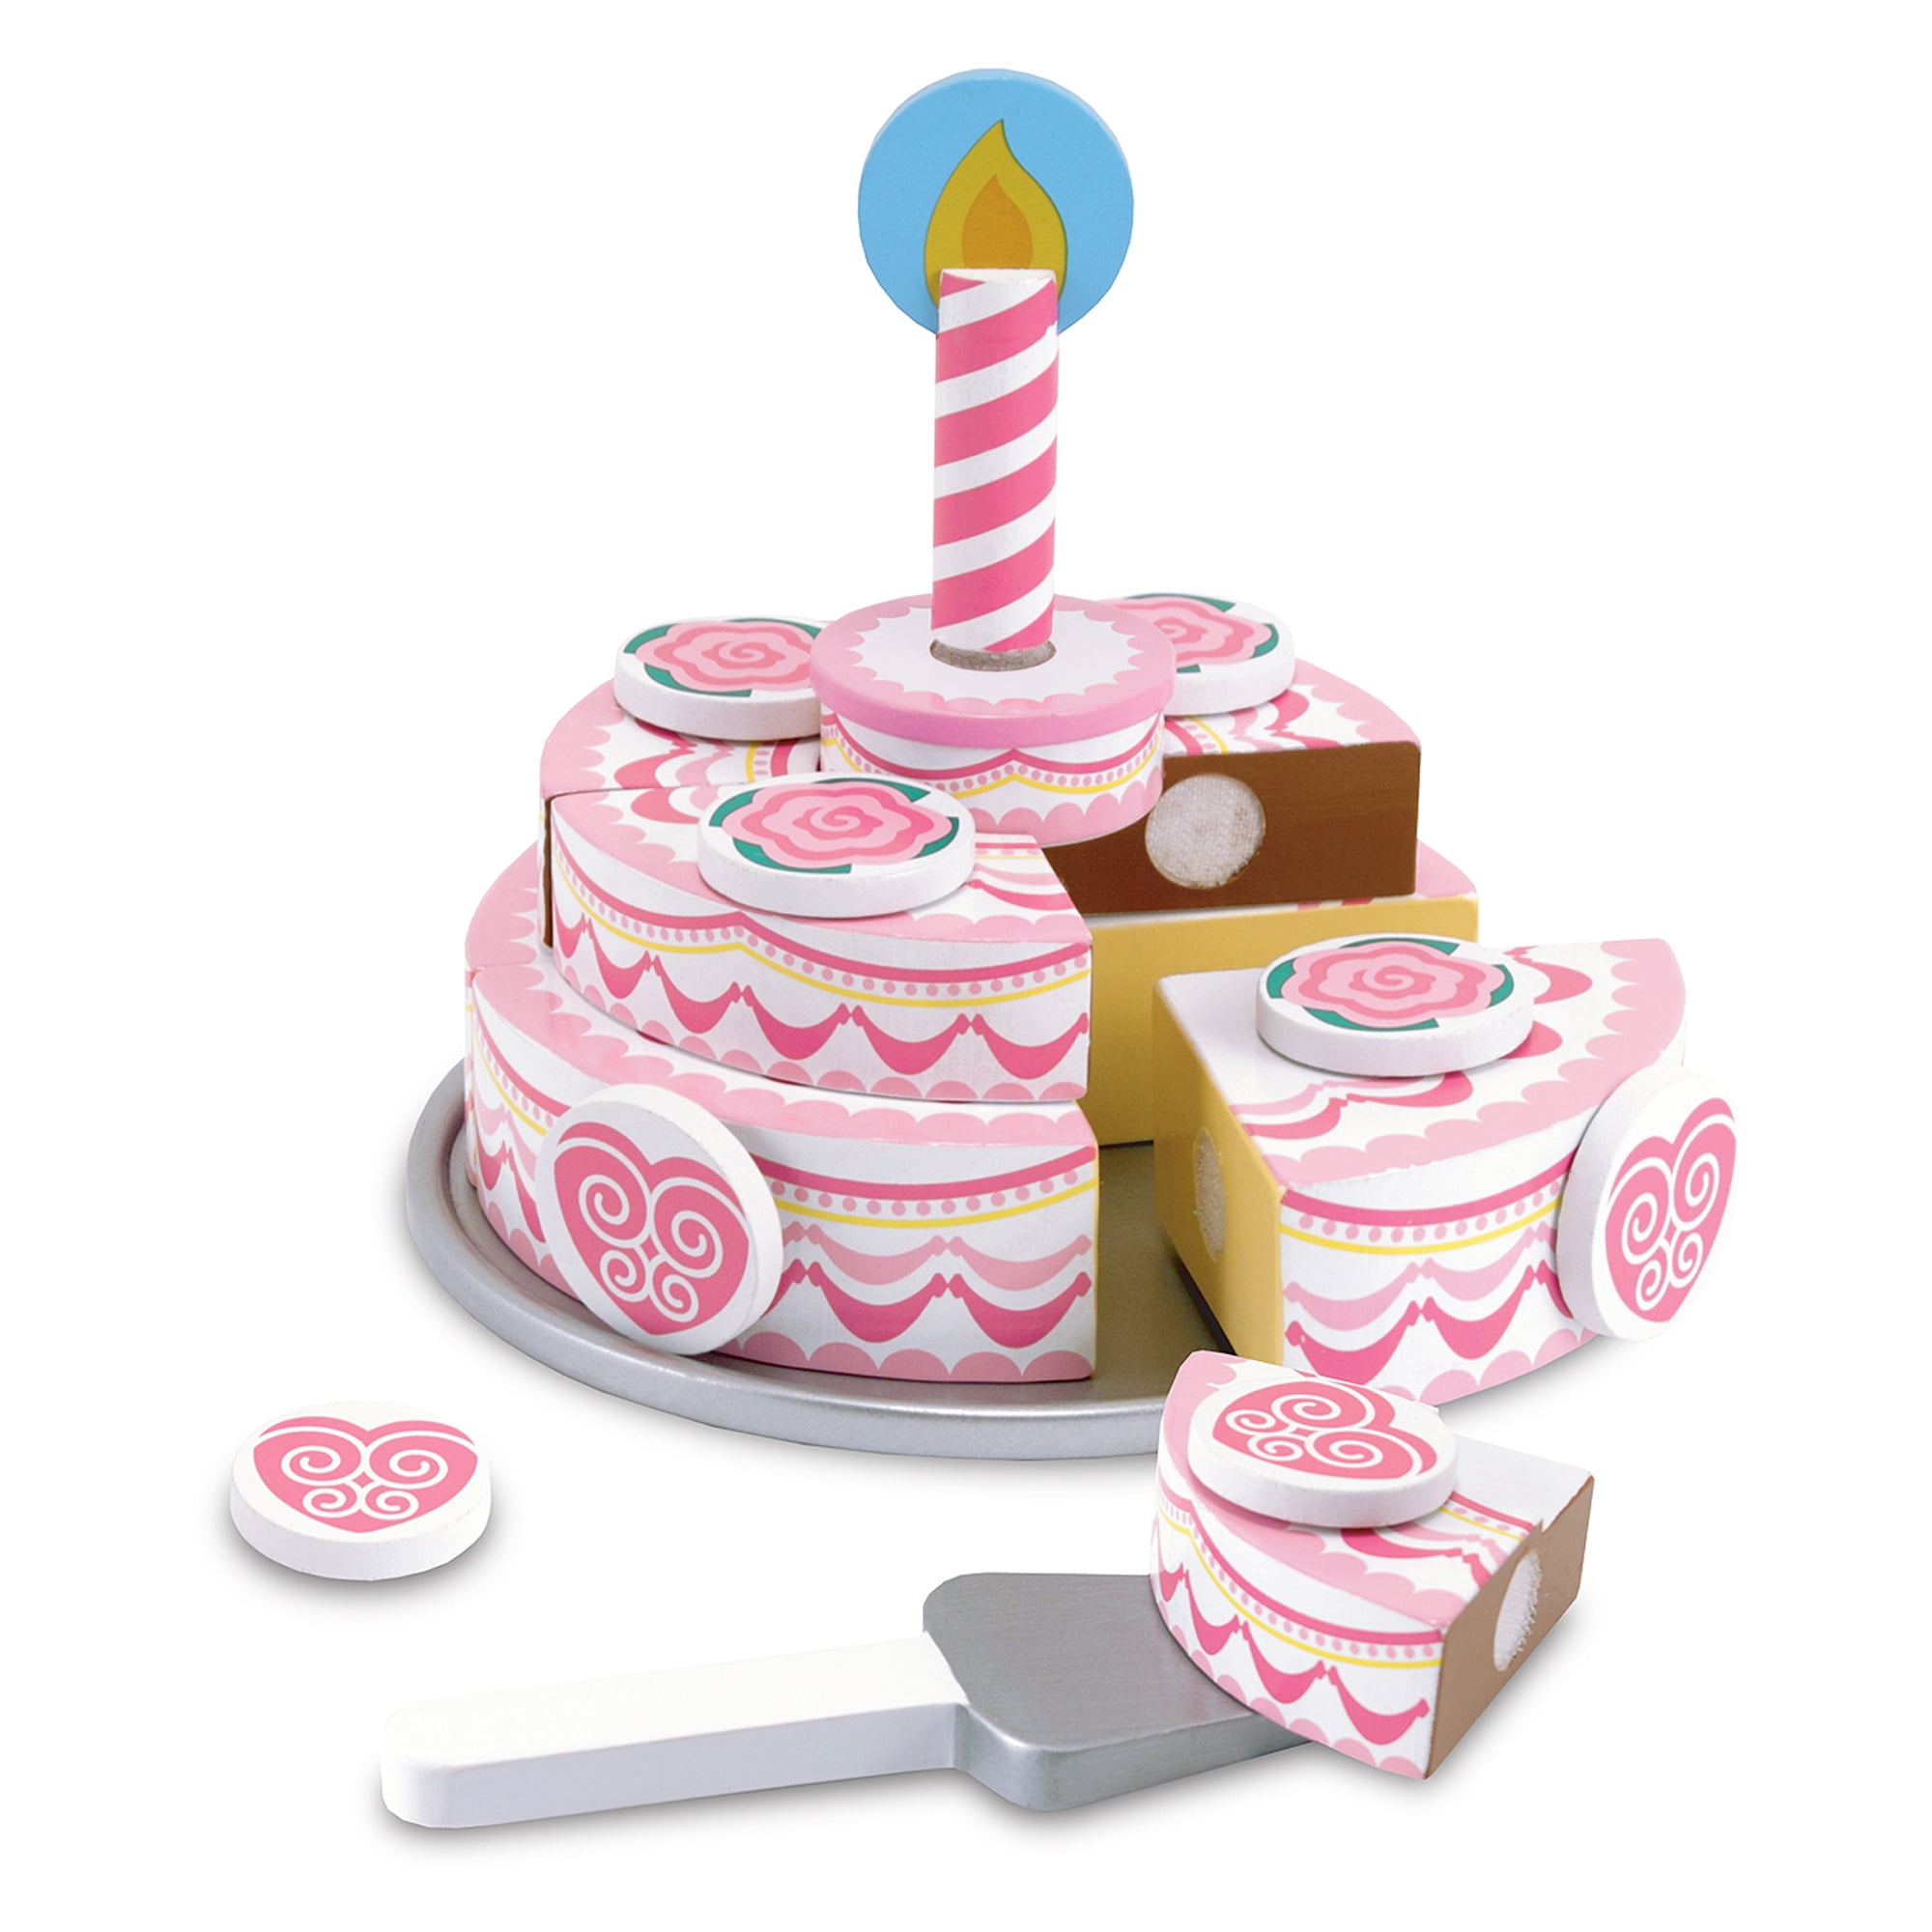 Melissa & Doug 511 Birthday Party Wood Set Play Cake Food PreK for sale online 